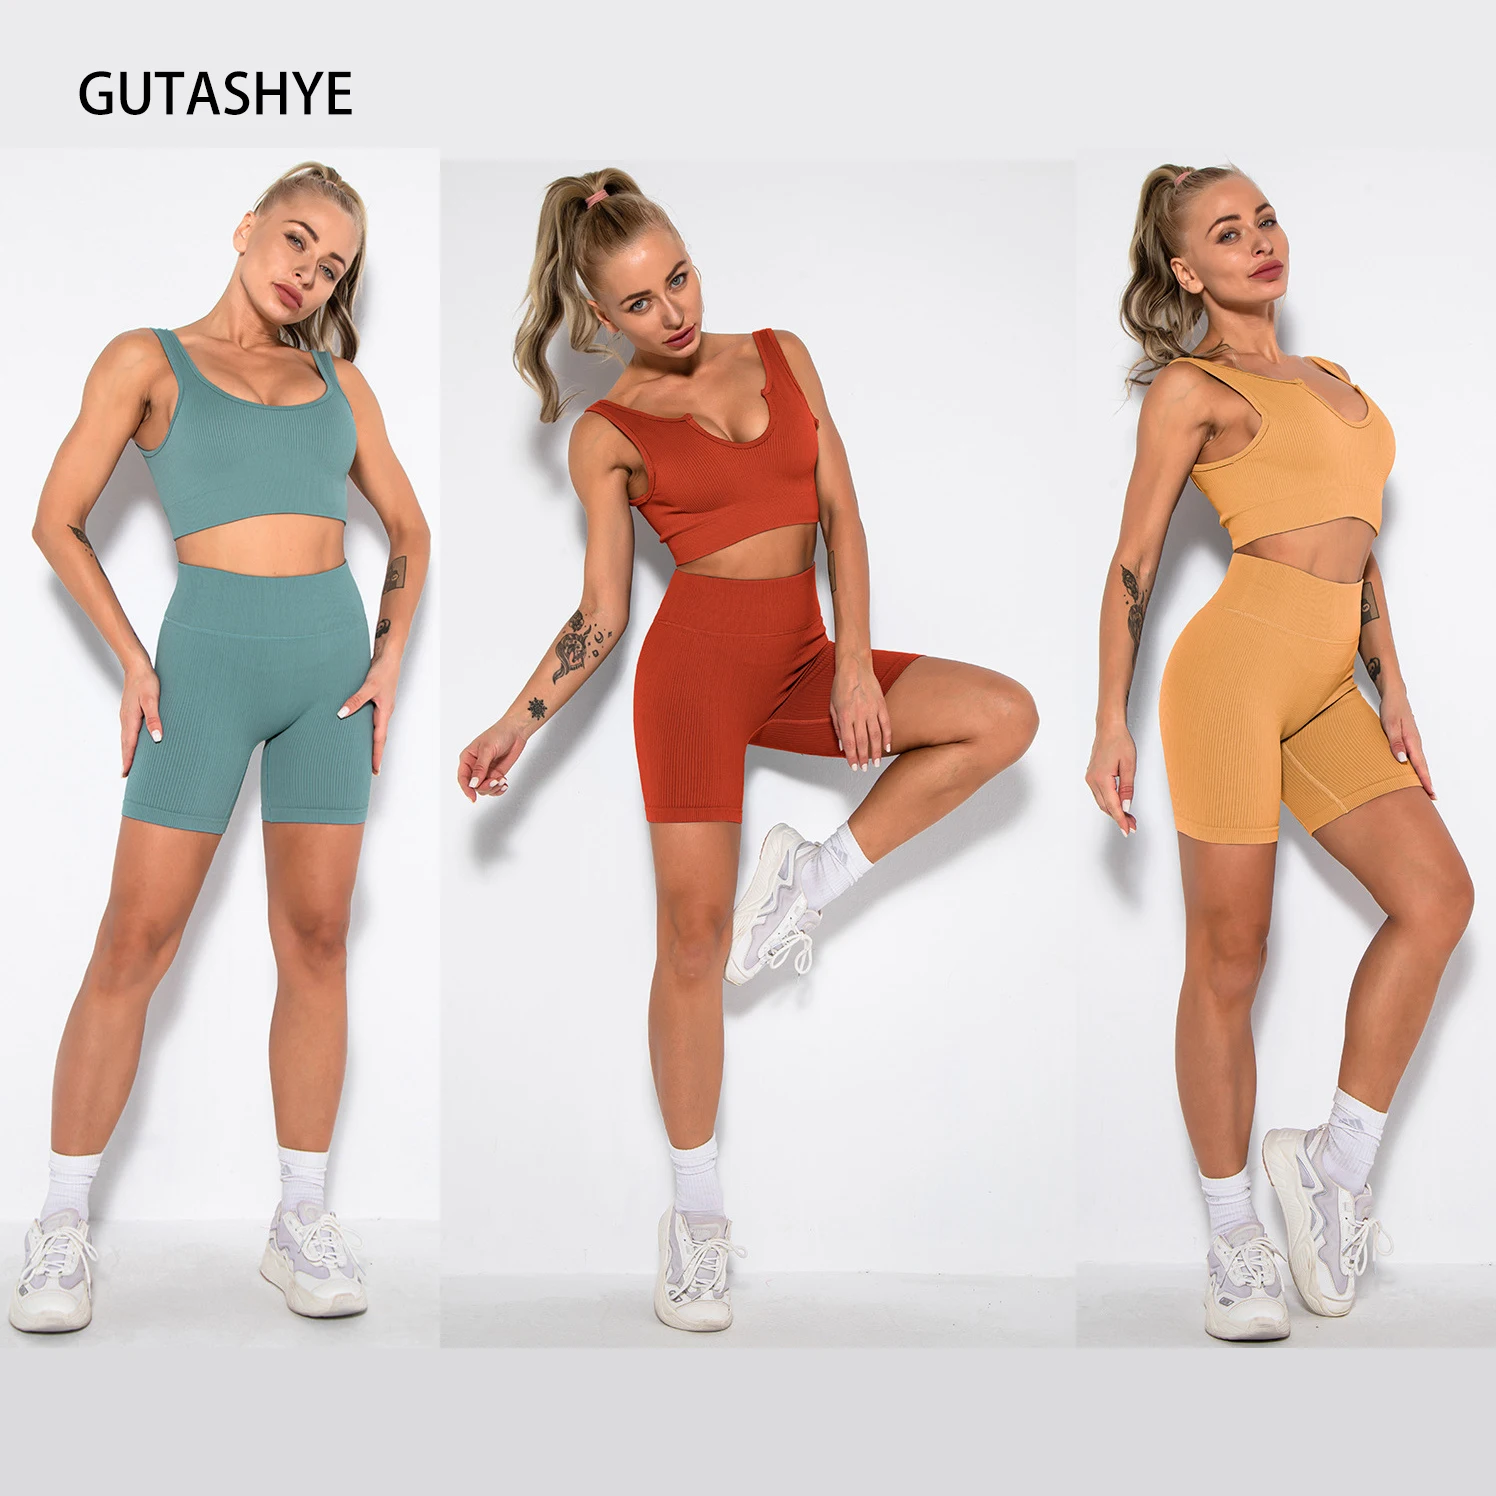 

GUTASHYE Yoga Set Women Crop Top Shorts Seamless Leggings Gym Clothing Running Fitness Sport Athletic Workout Clothes for Women